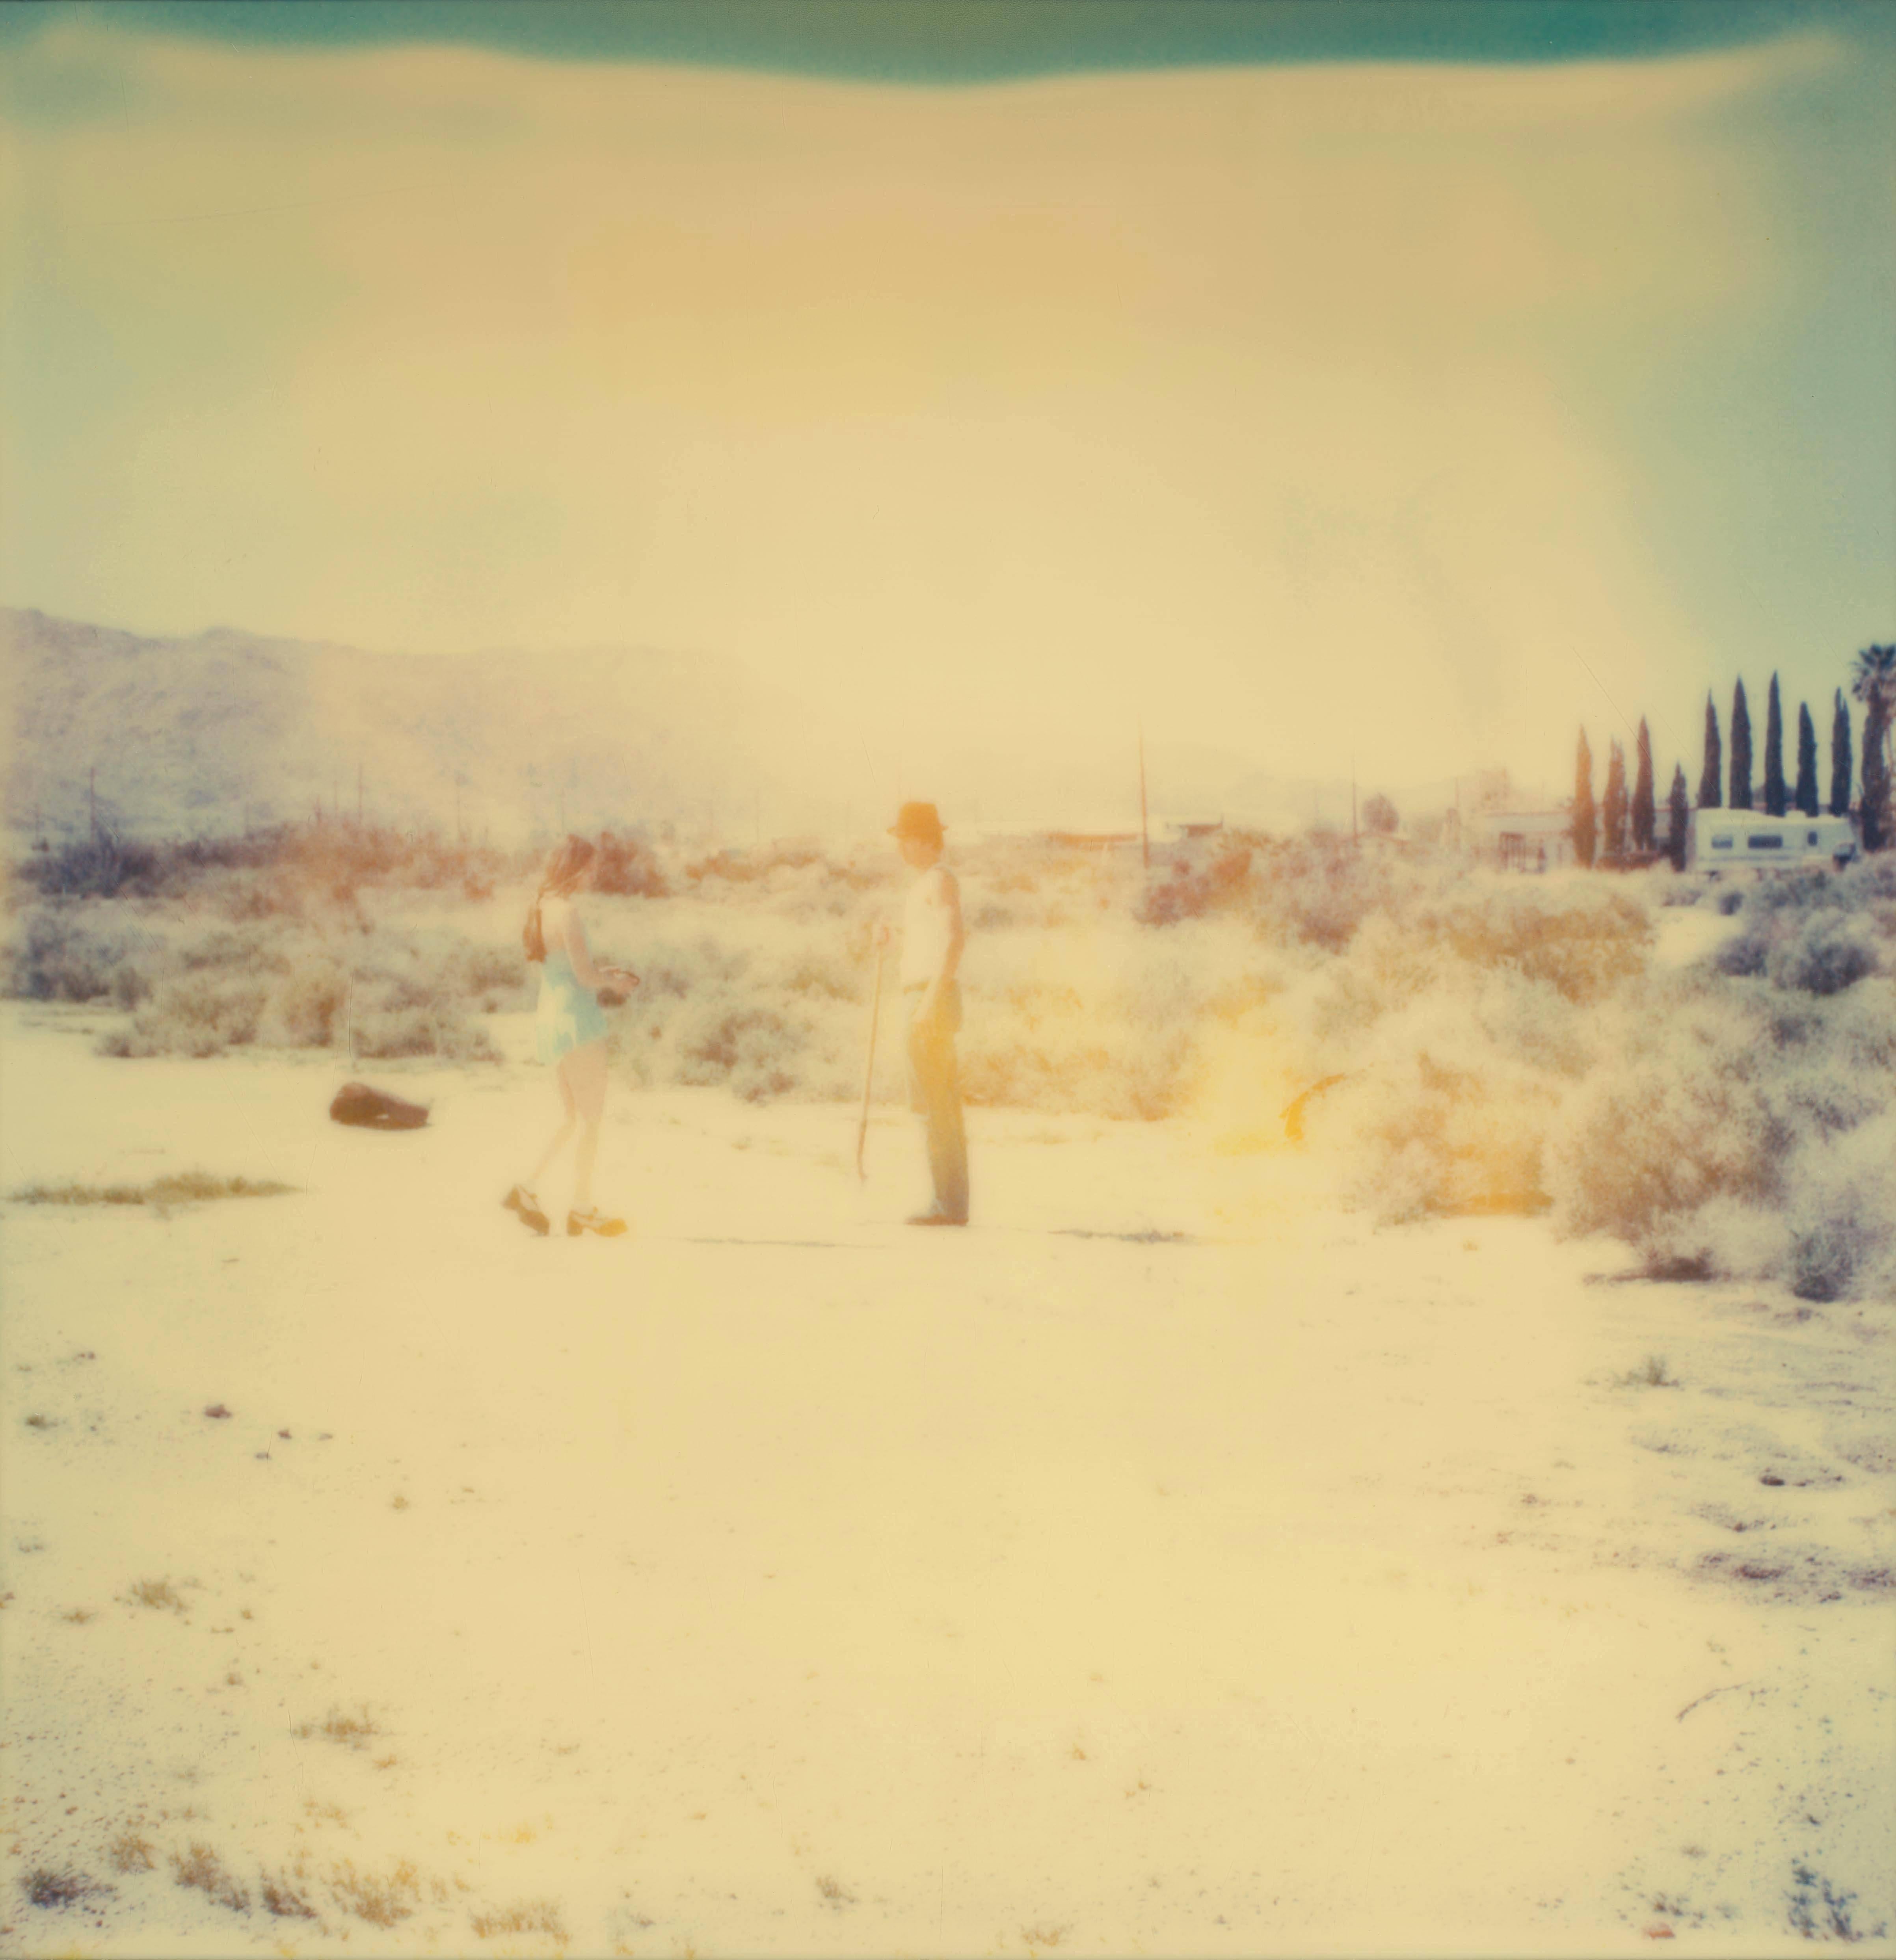 Stefanie Schneider Figurative Photograph - Crow Burial - Contemporary, Polaroid, Analogue, Photography, Figurative, 